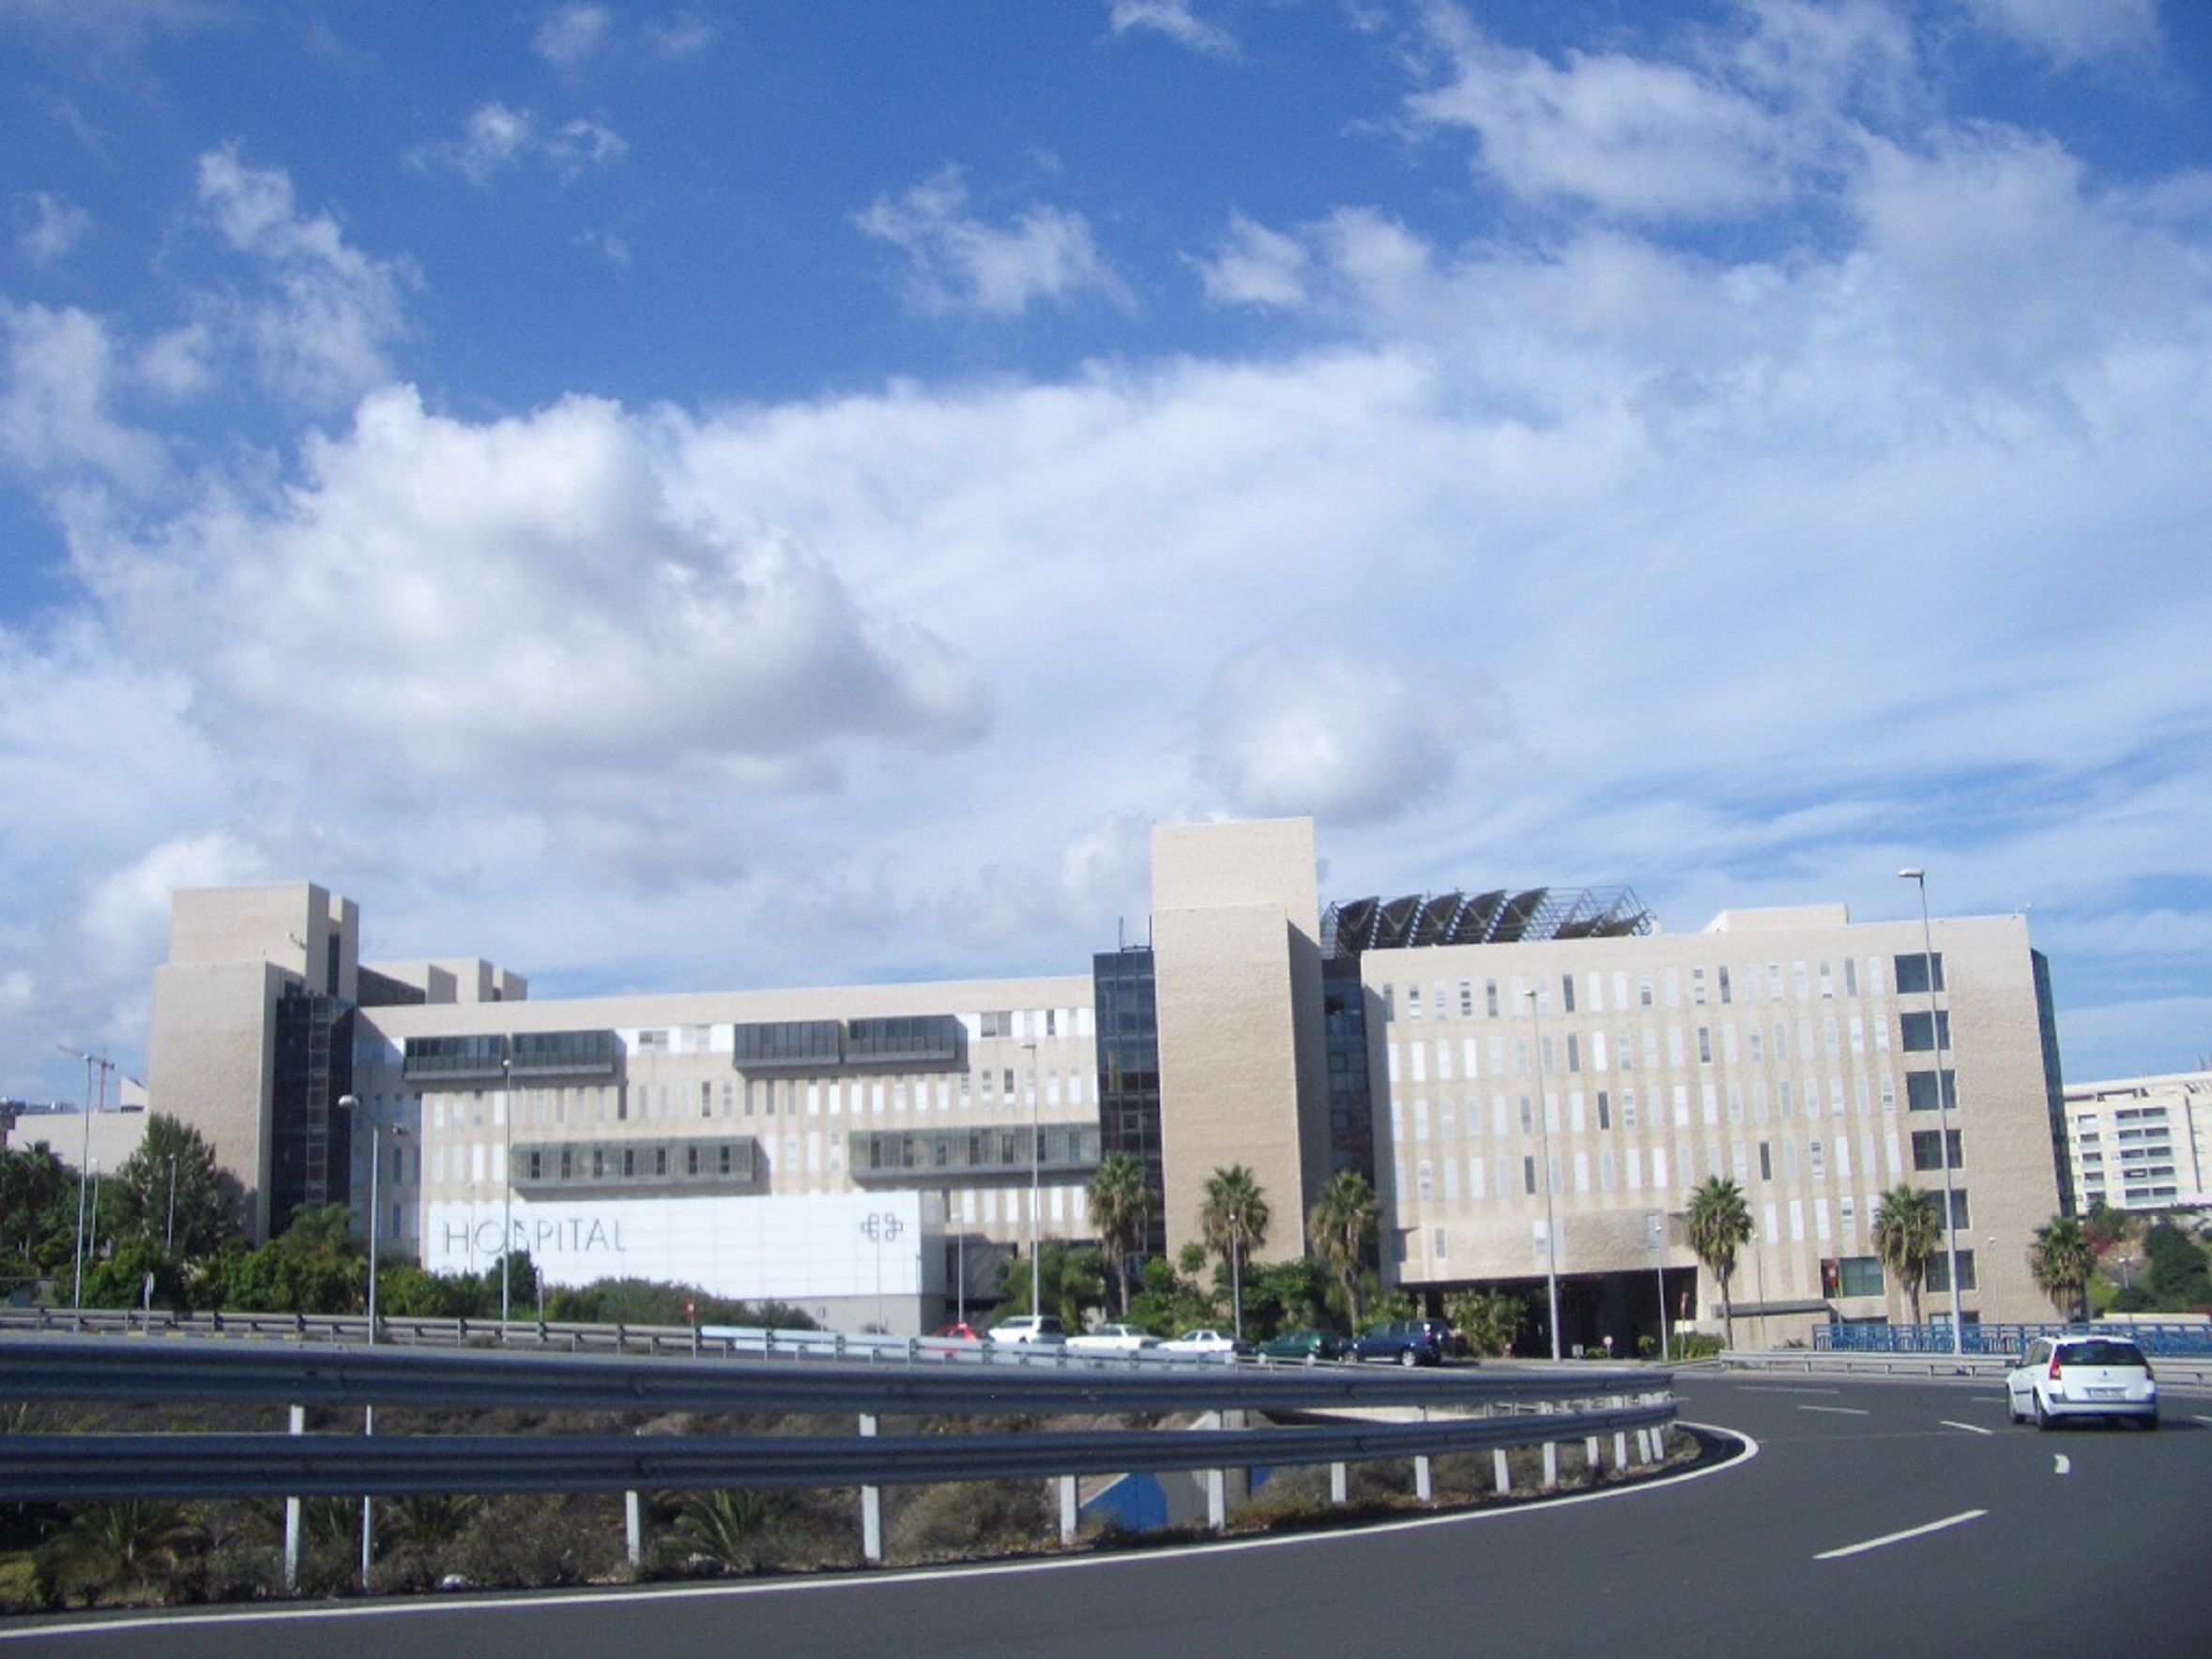 Hospital Canarias / Wikimedia